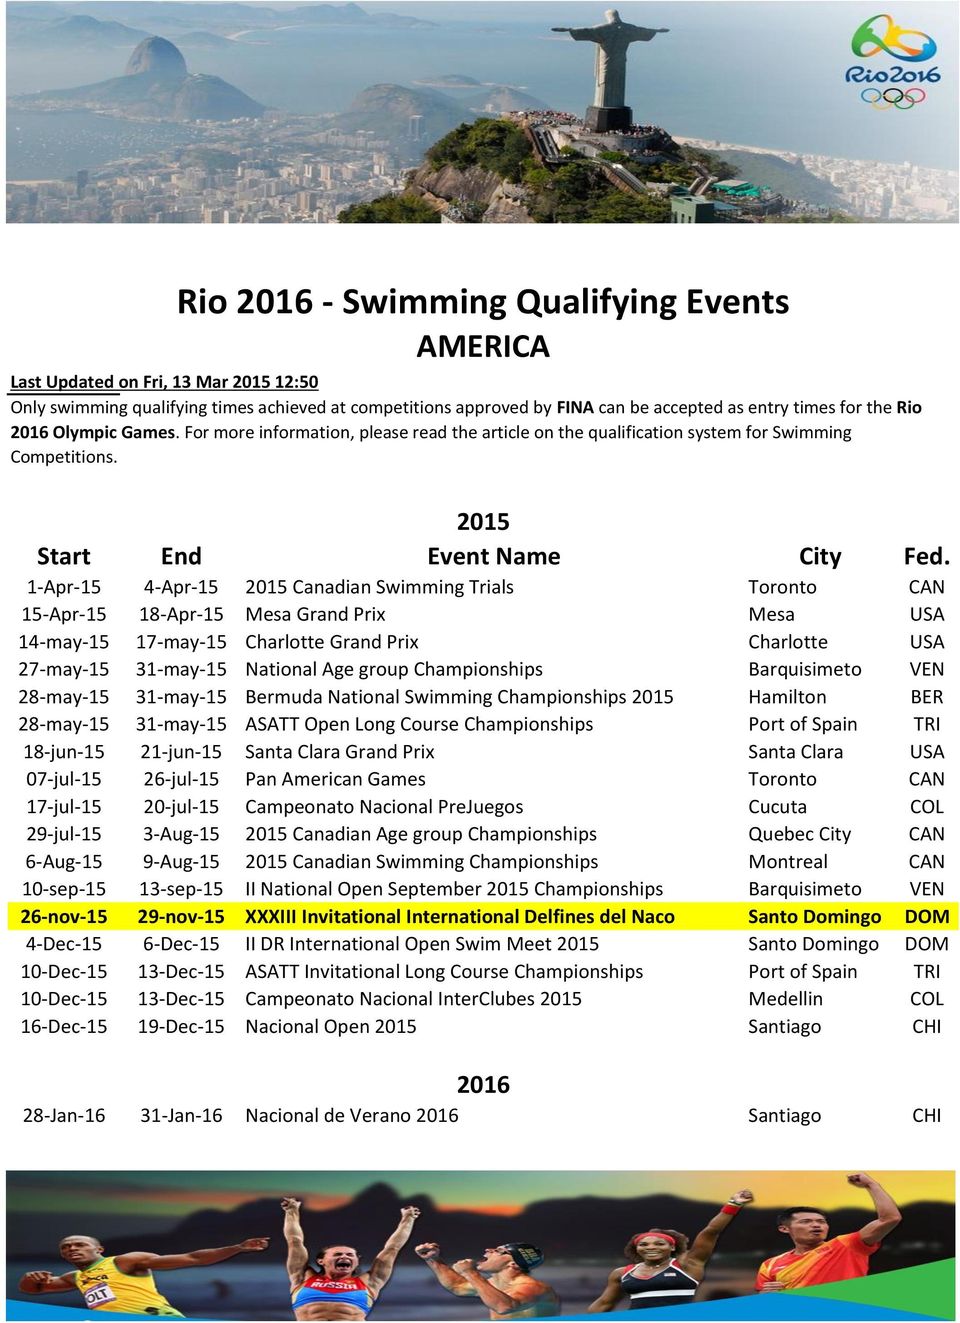 1-Apr-15 4-Apr-15 2015 Canadian Swimming Trials Toronto CAN 15-Apr-15 18-Apr-15 Mesa Grand Prix Mesa USA 14-may-15 17-may-15 Charlotte Grand Prix Charlotte USA 27-may-15 31-may-15 National Age group